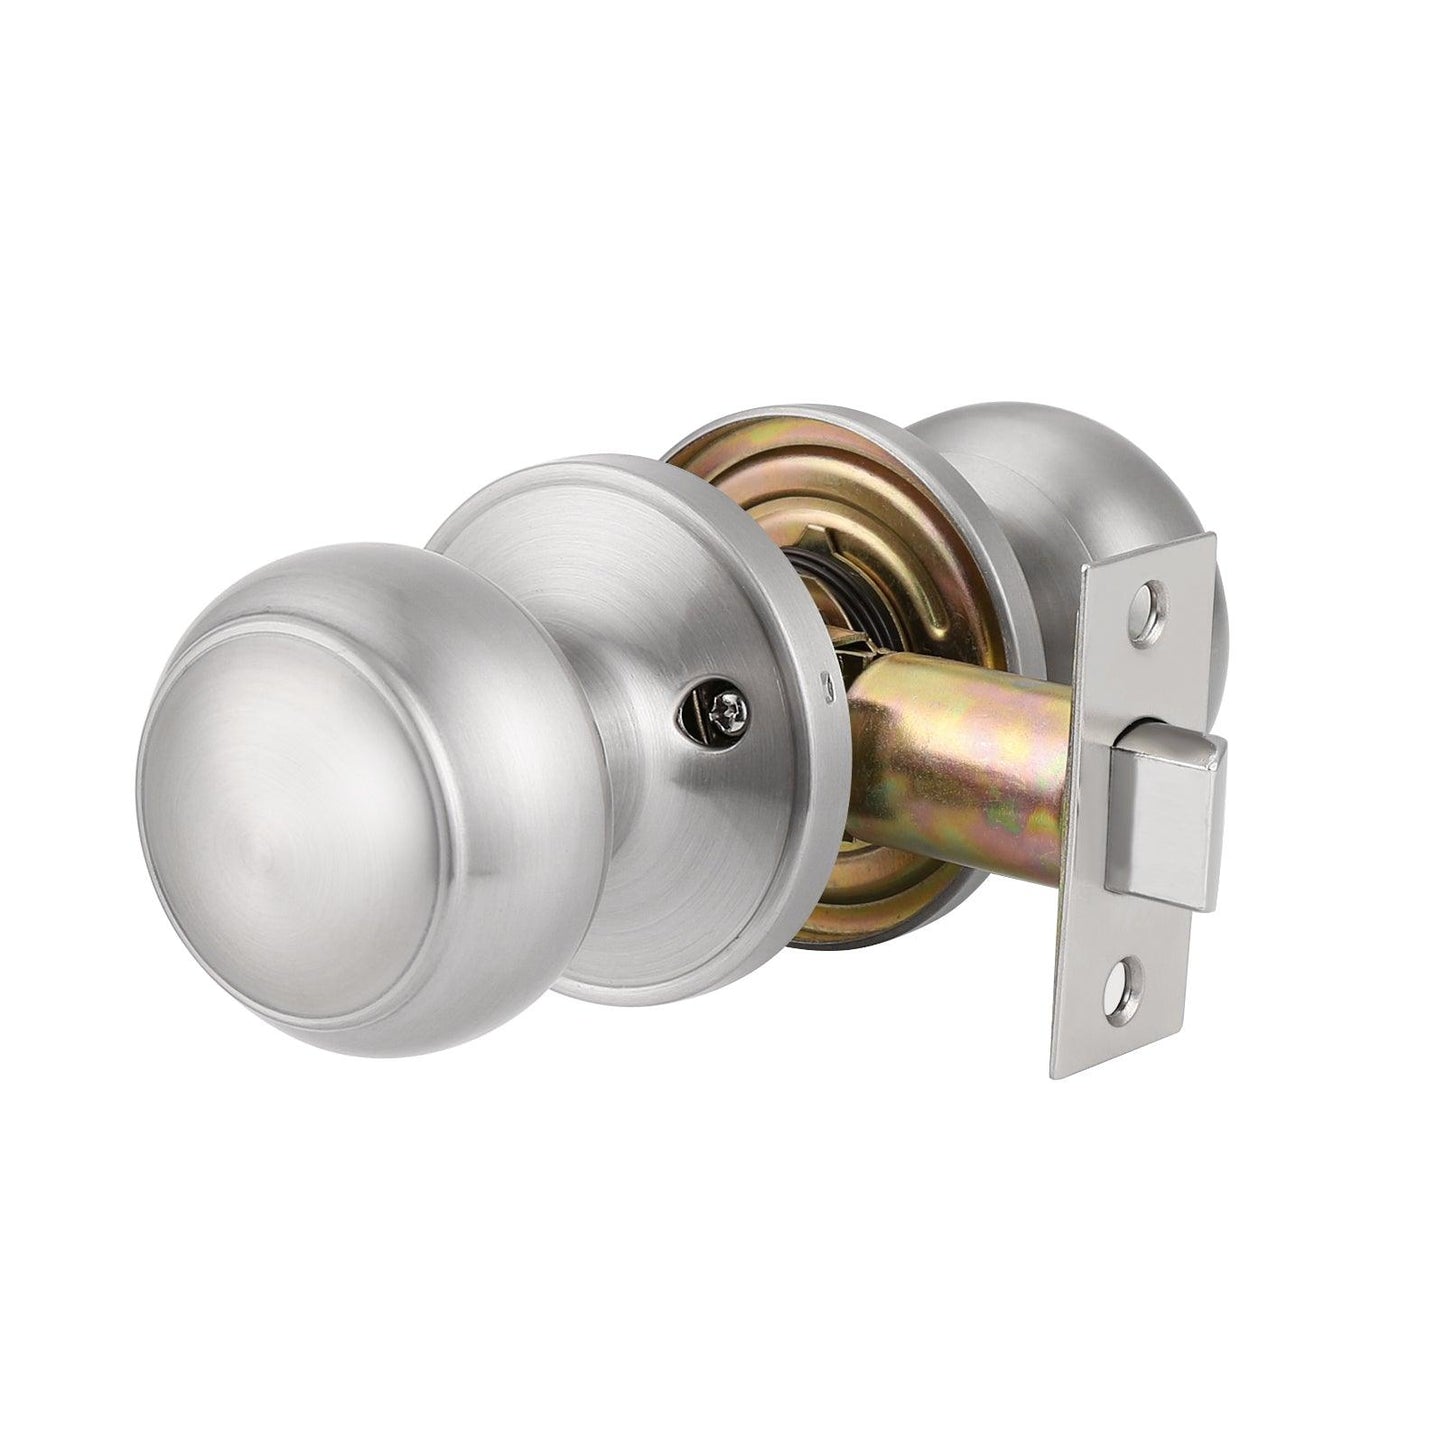 Flat Ball Knobs Keyed Alike/Entry Keyed/Privacy/Passage/Dummy Door Lock Knobs DL609SN Satin Nickel Finish - Probrico